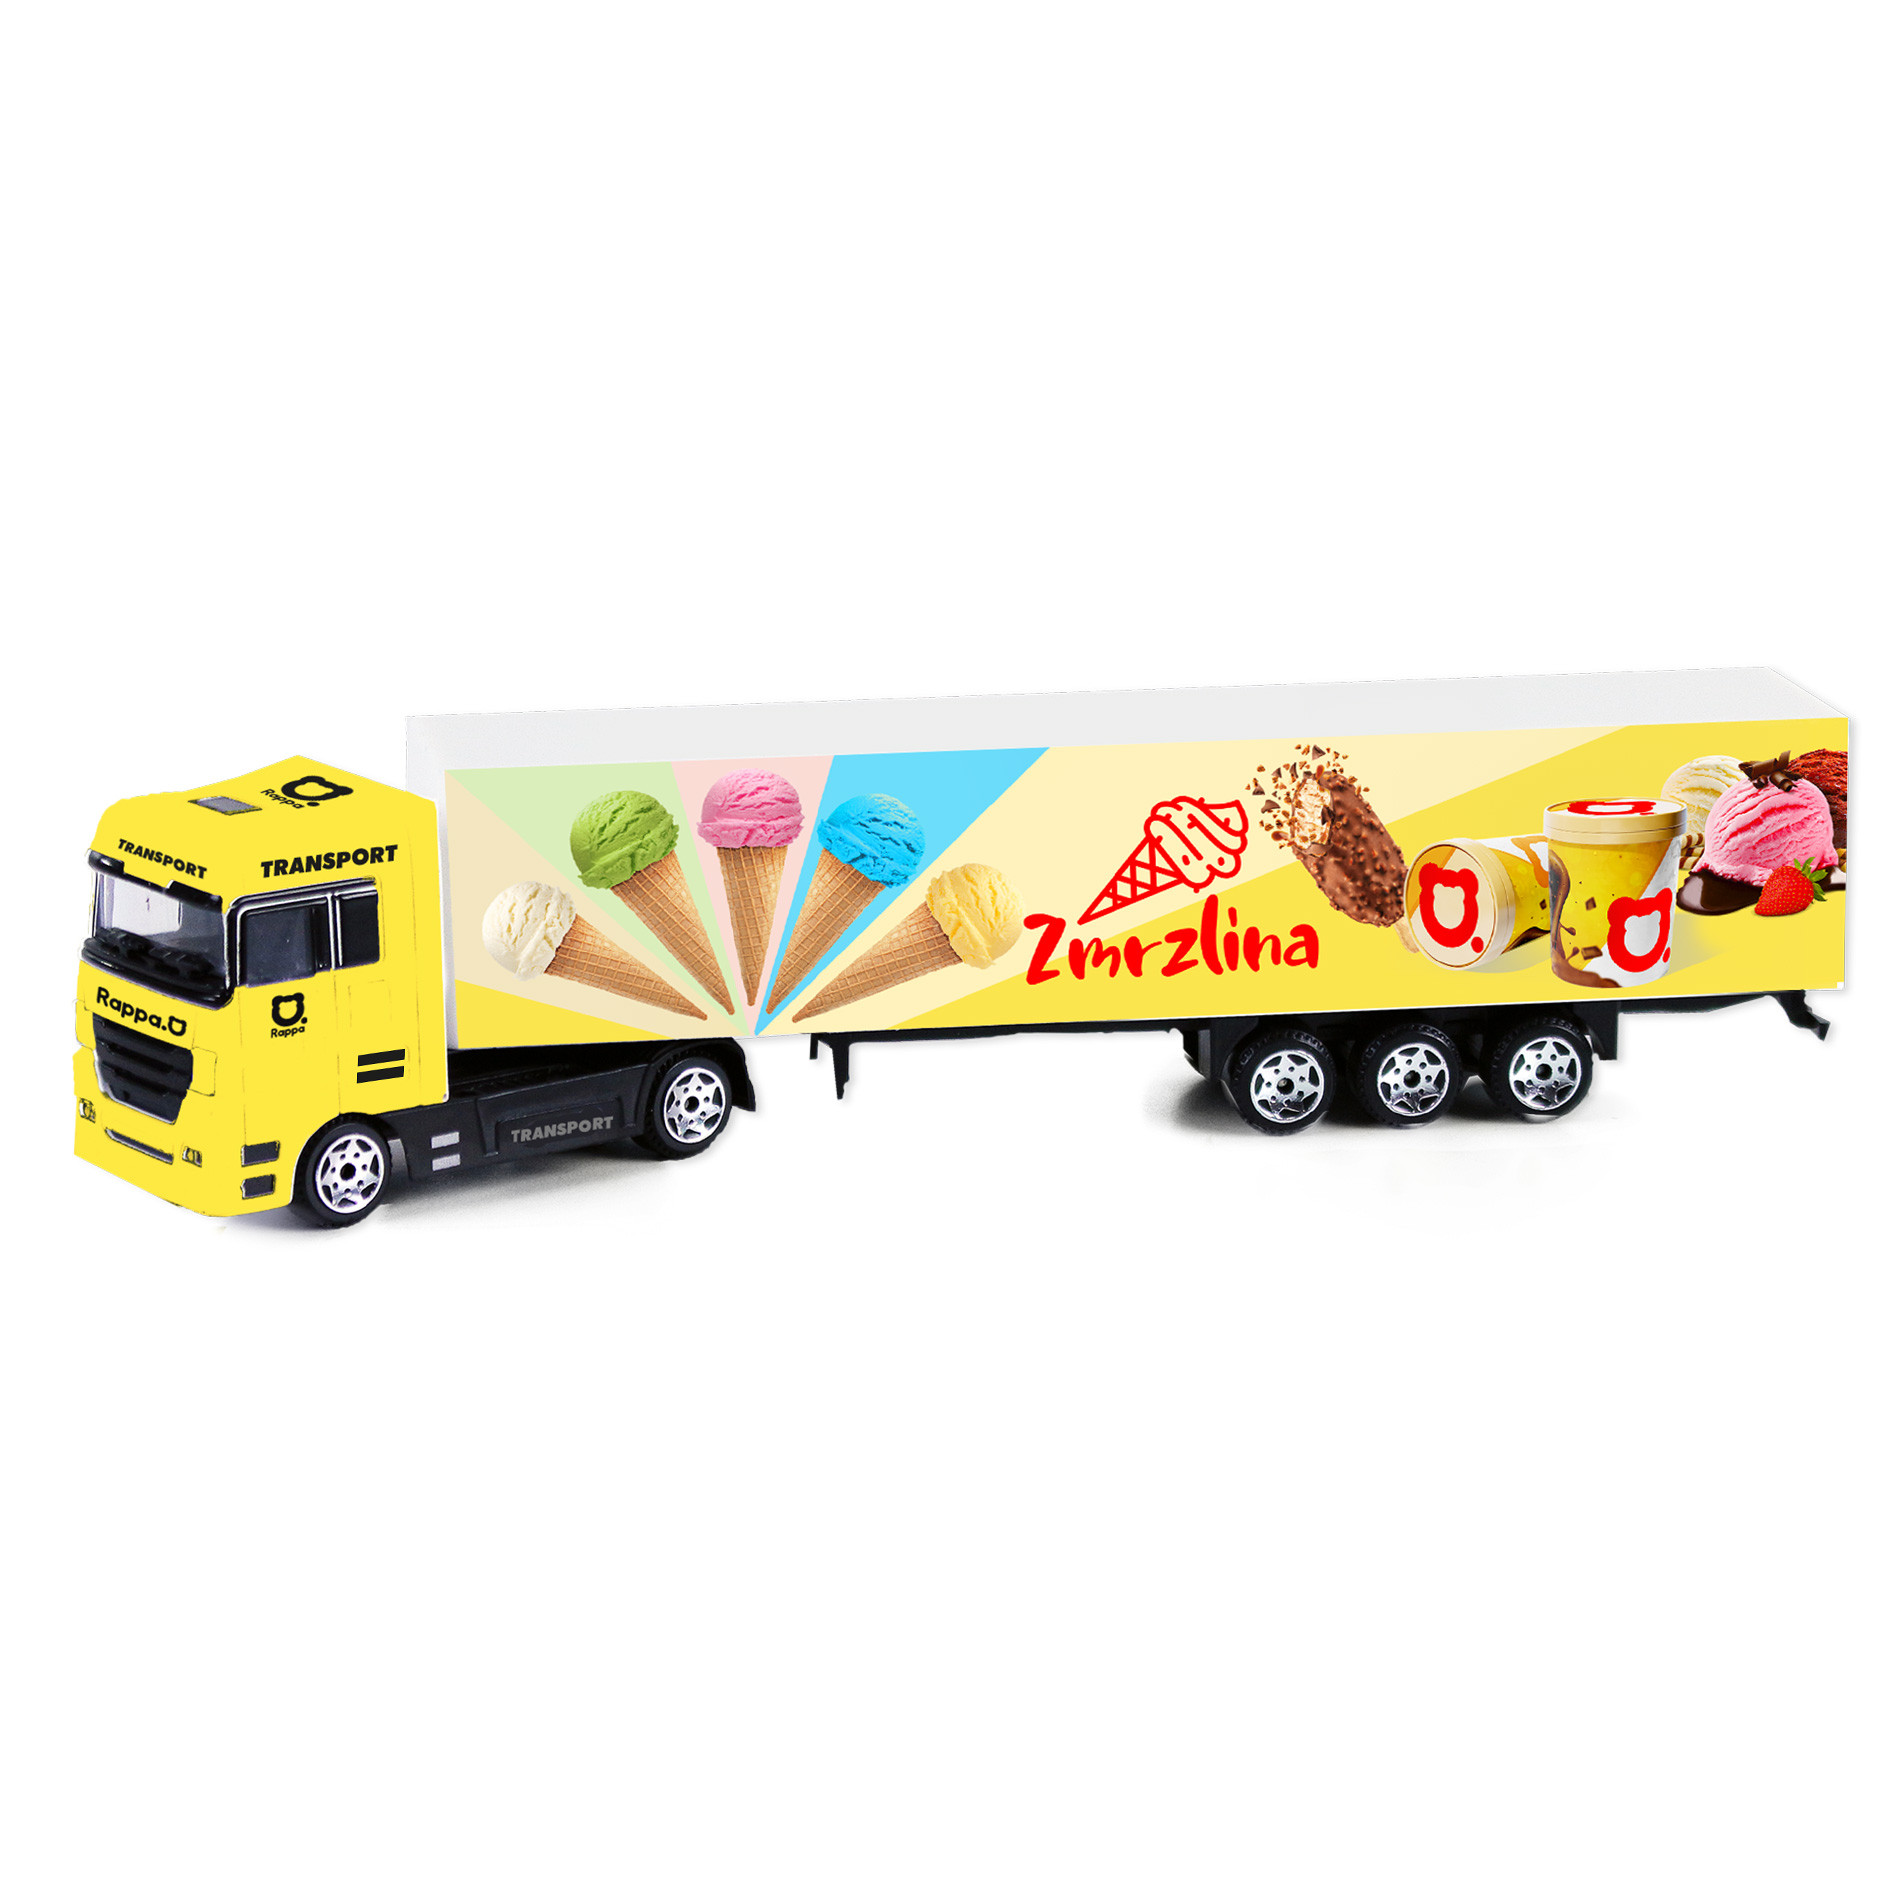 Auto kamion nanuky a zmrzliny